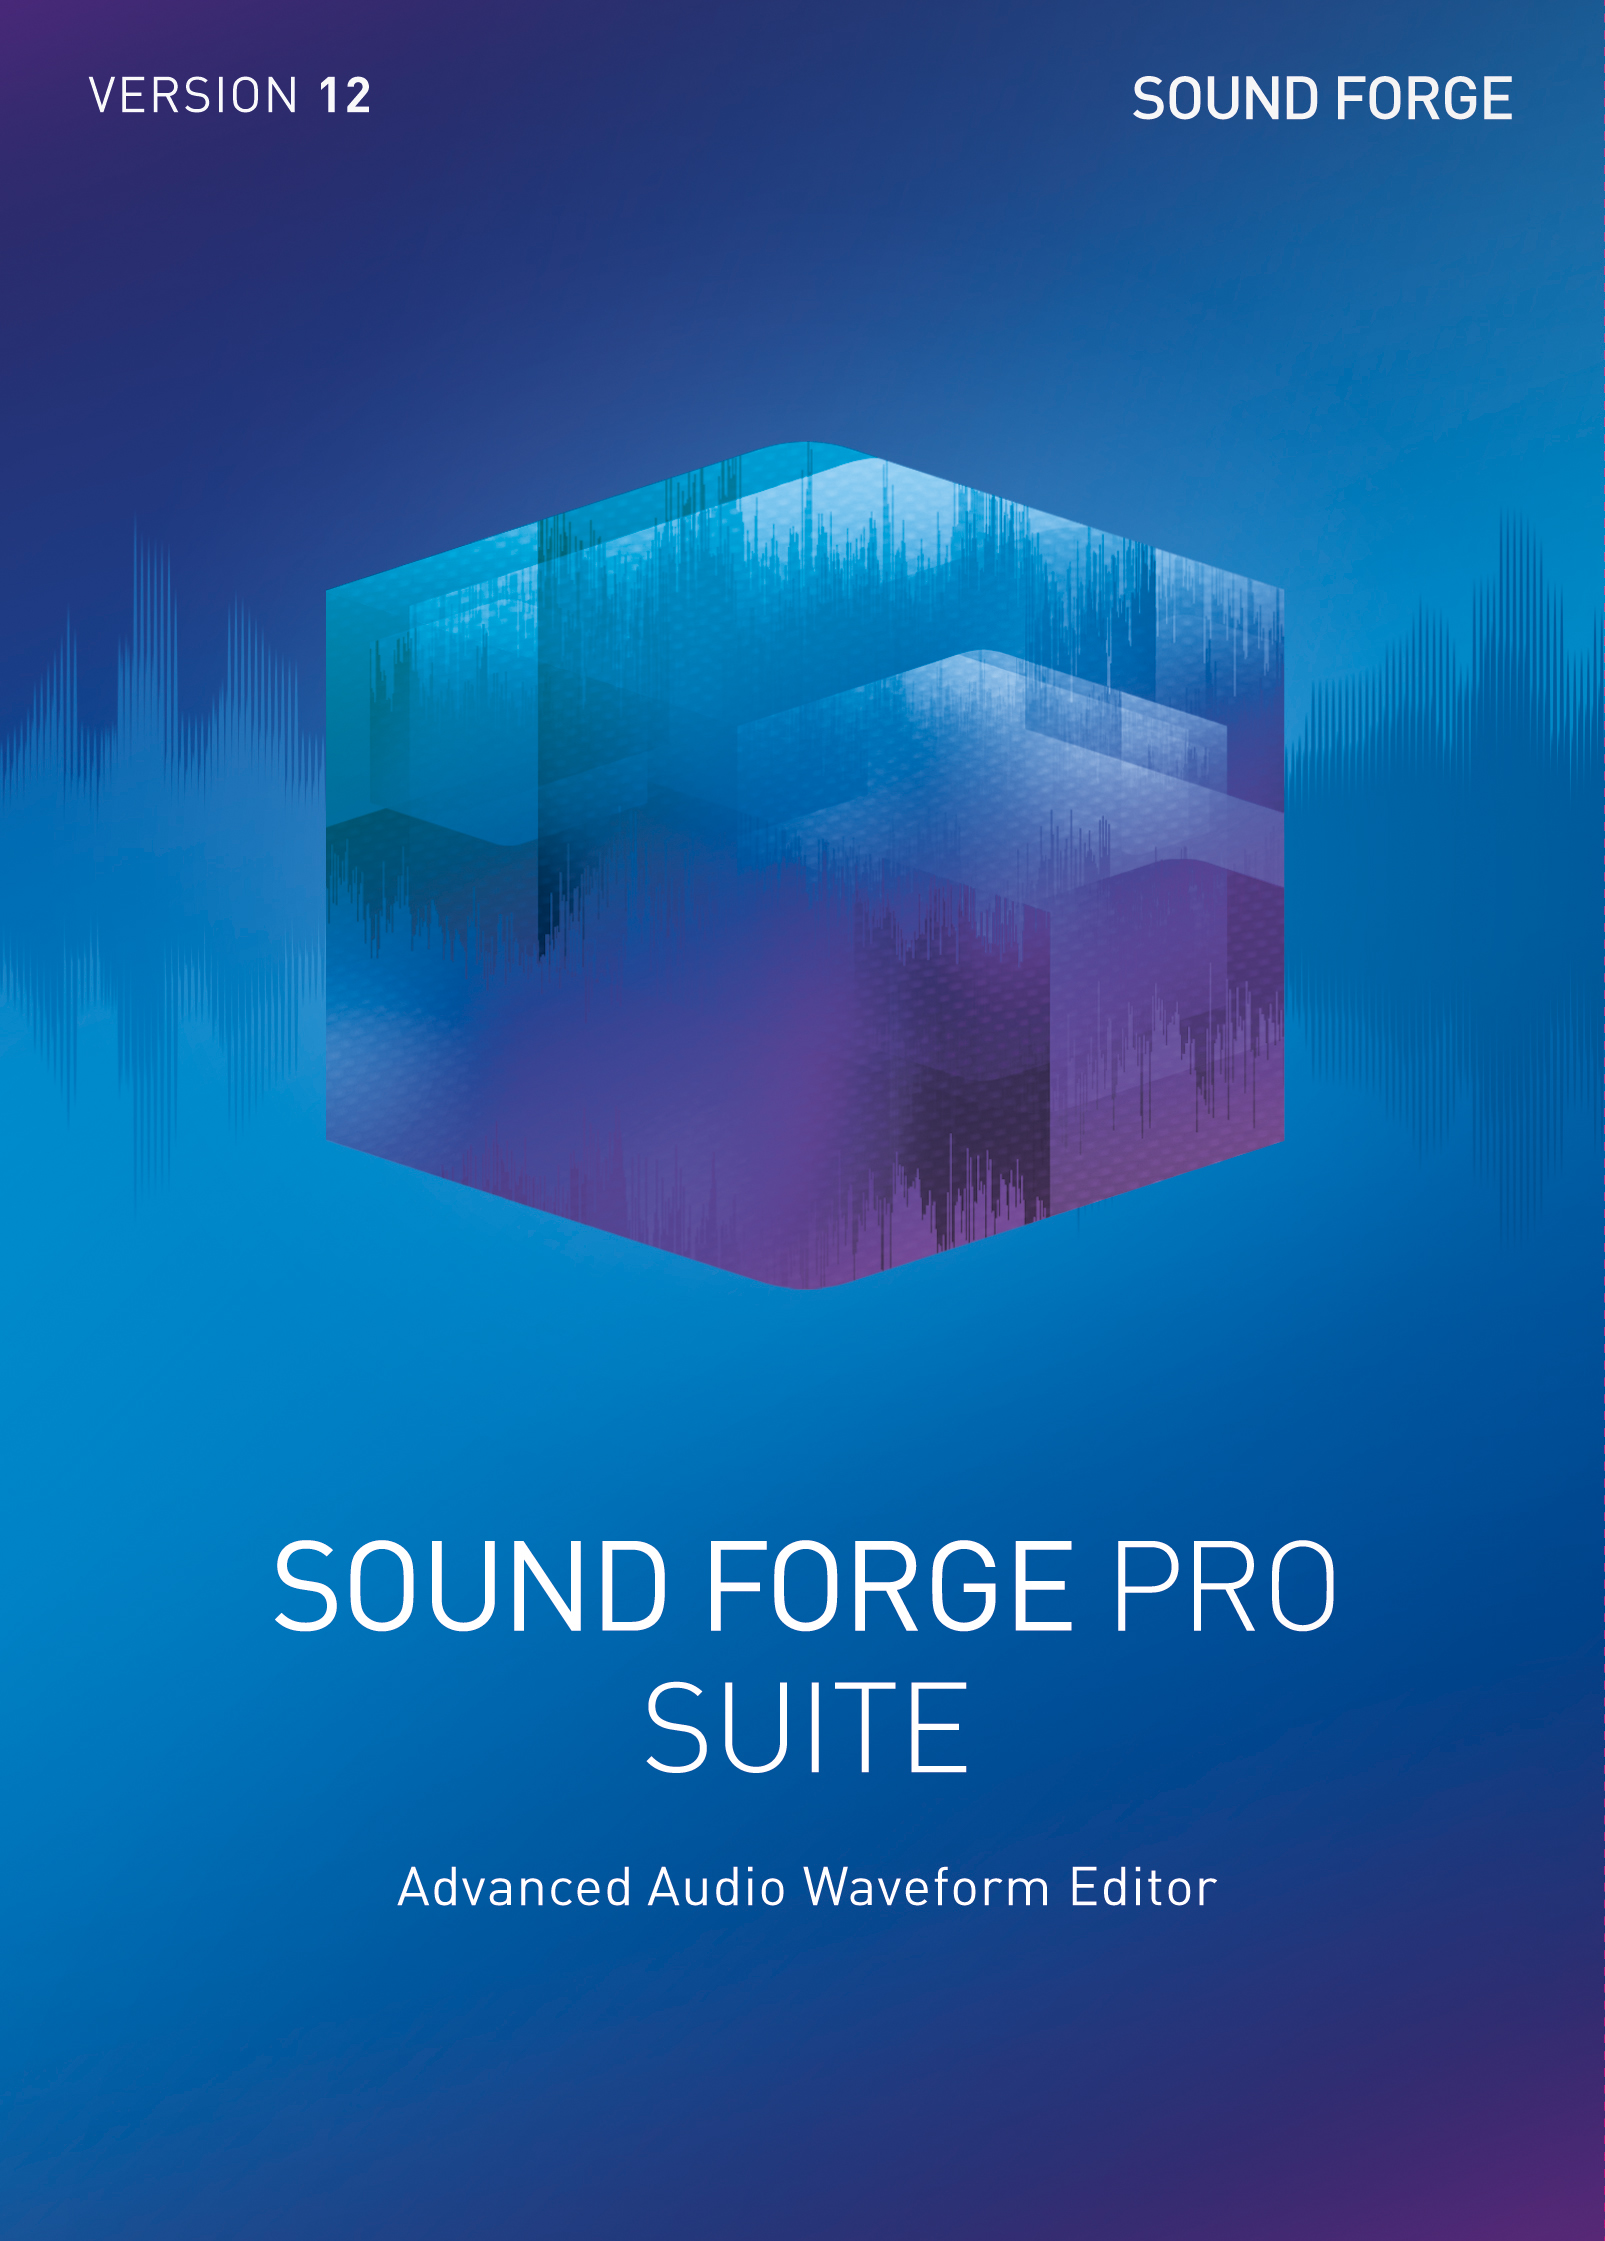 sound forge pro 12 suite